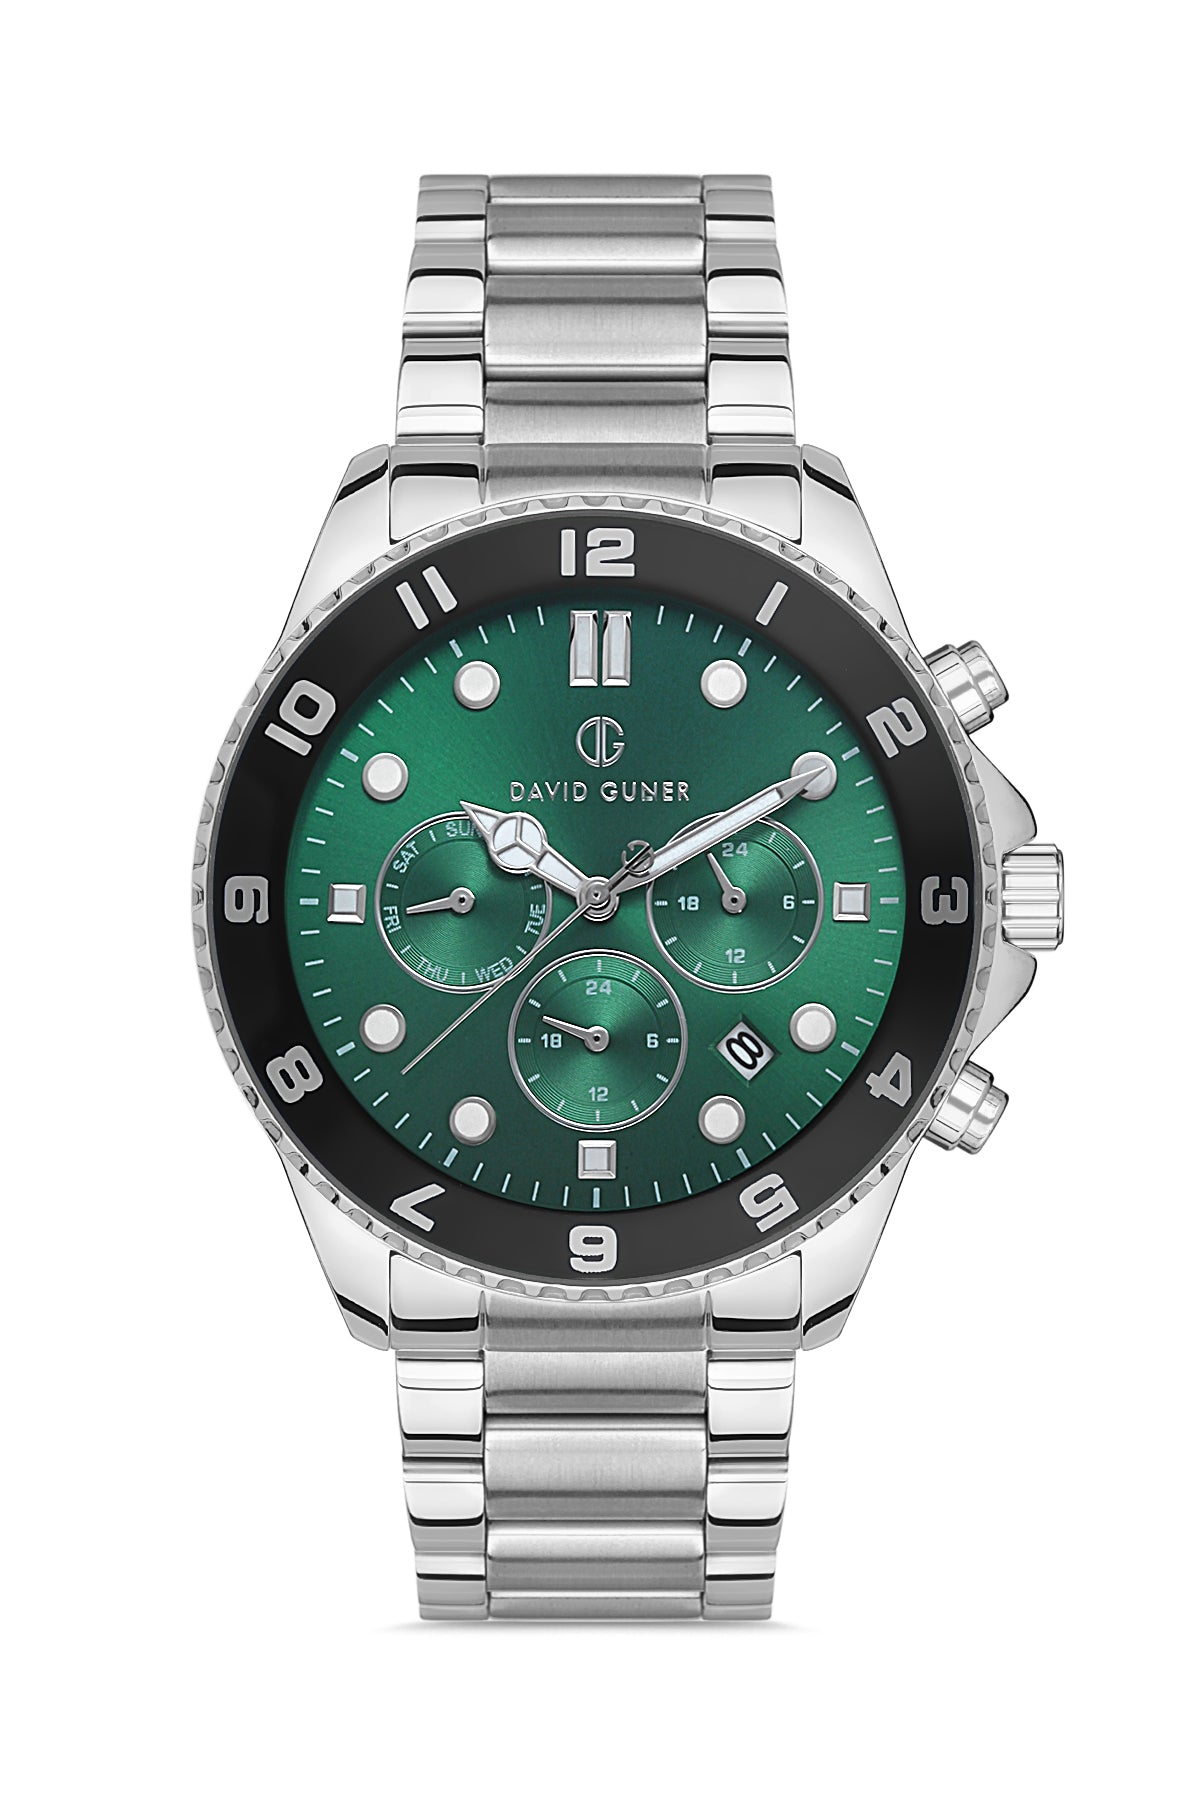 DAVID GUNER Green Dial Men's Wristwatch